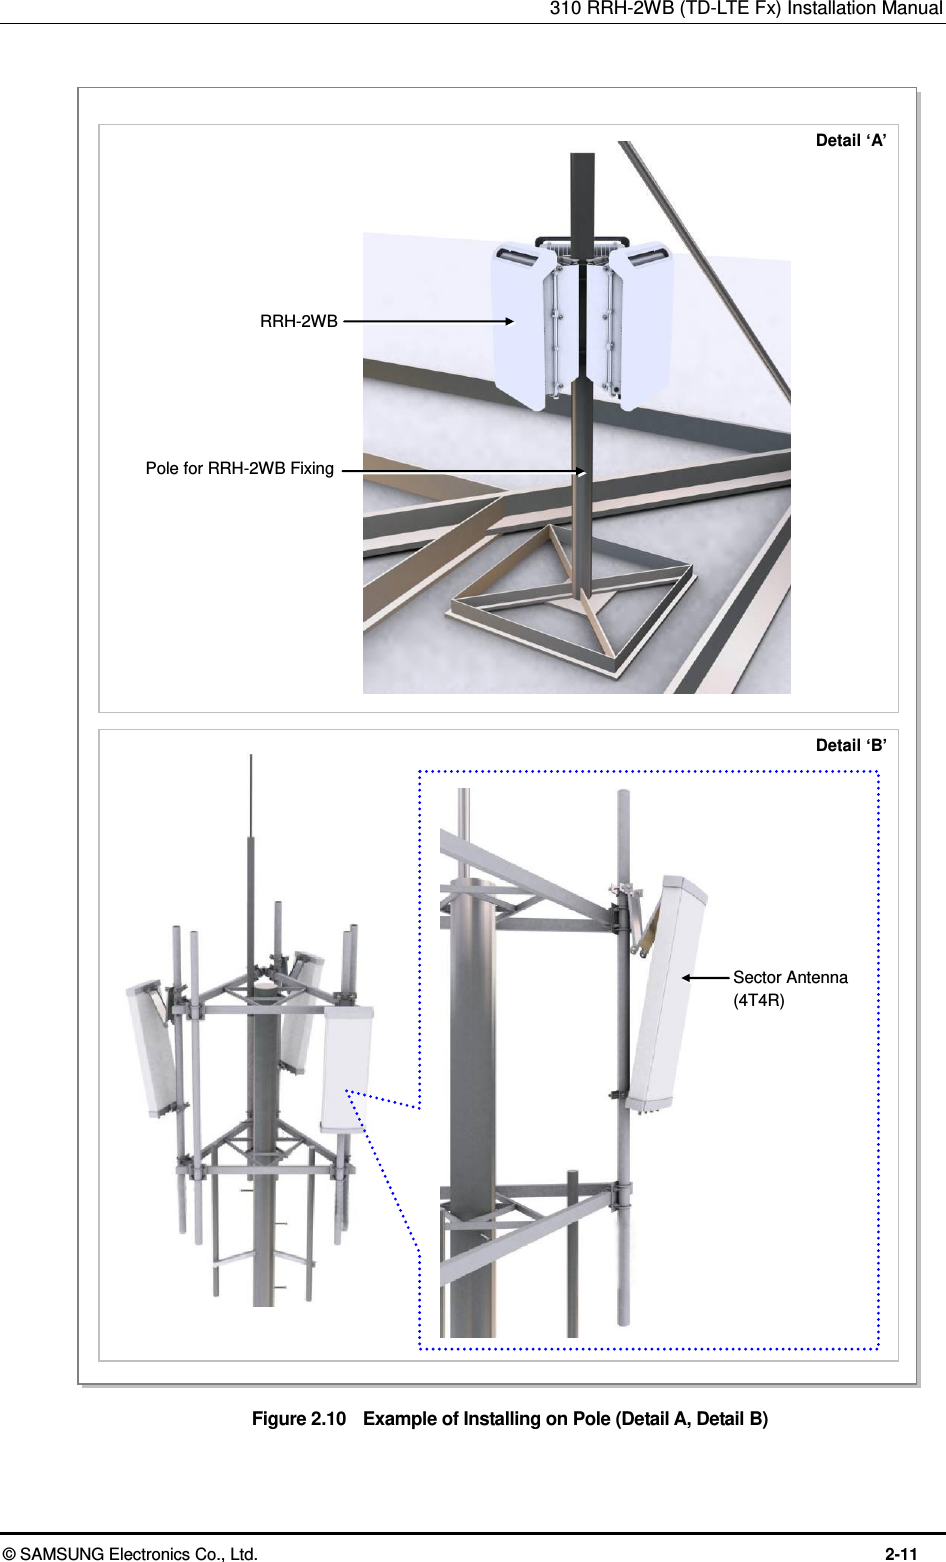 310 RRH-2WB (TD-LTE Fx) Installation Manual  © SAMSUNG Electronics Co., Ltd.  2-11  Figure 2.10    Example of Installing on Pole (Detail A, Detail B)  Detail ‘A’ RRH-2WB Pole for RRH-2WB Fixing Detail ‘B’ Sector Antenna (4T4R) 